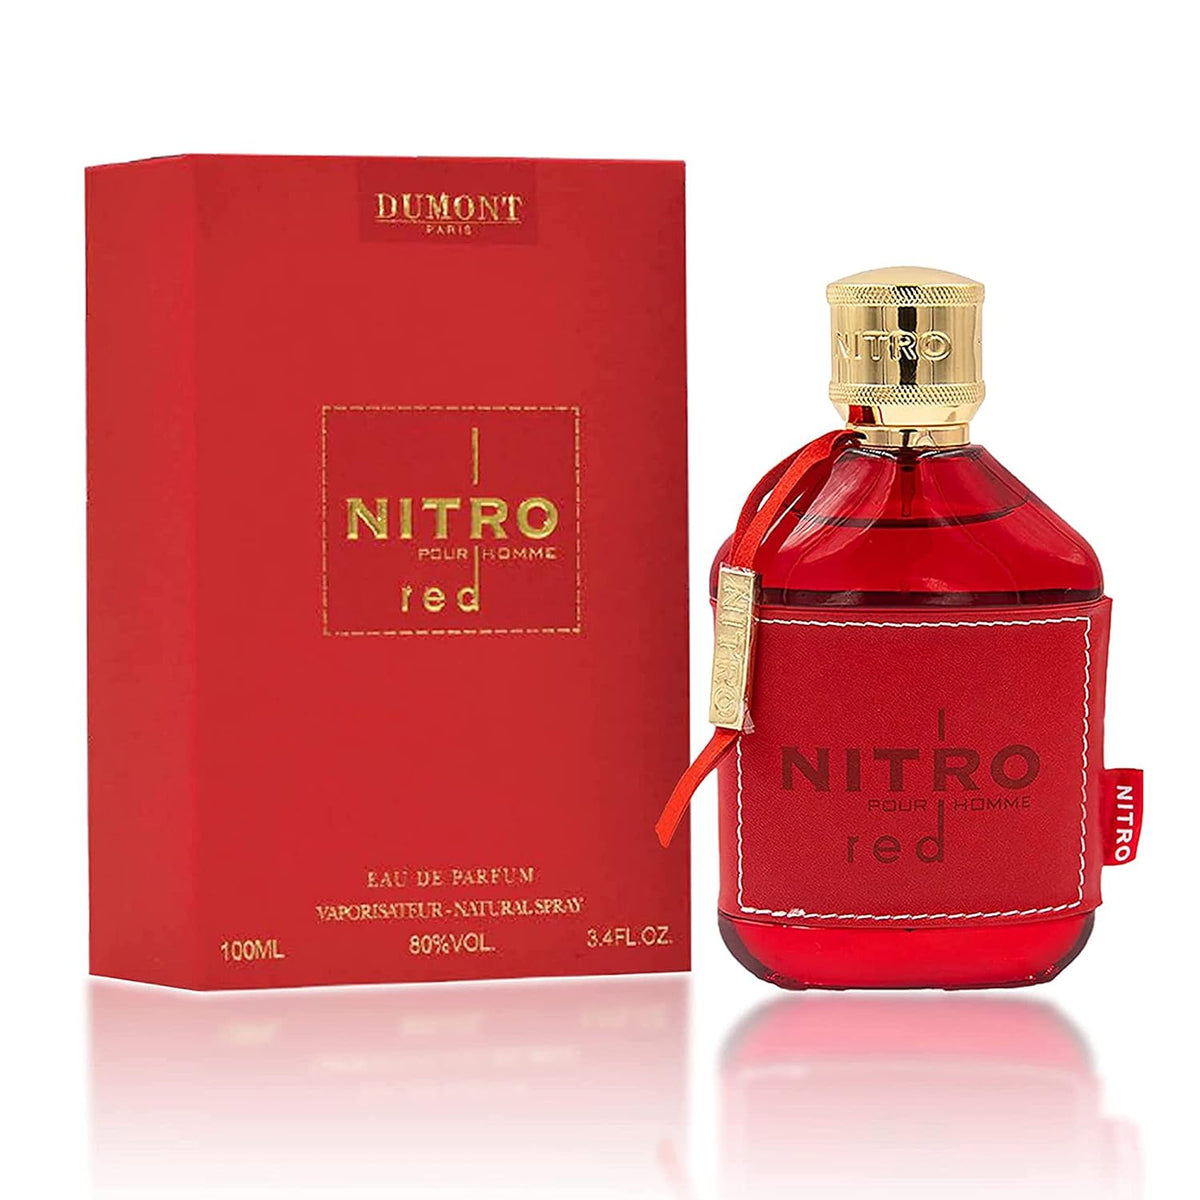 Nitro Red By Dumont Paris